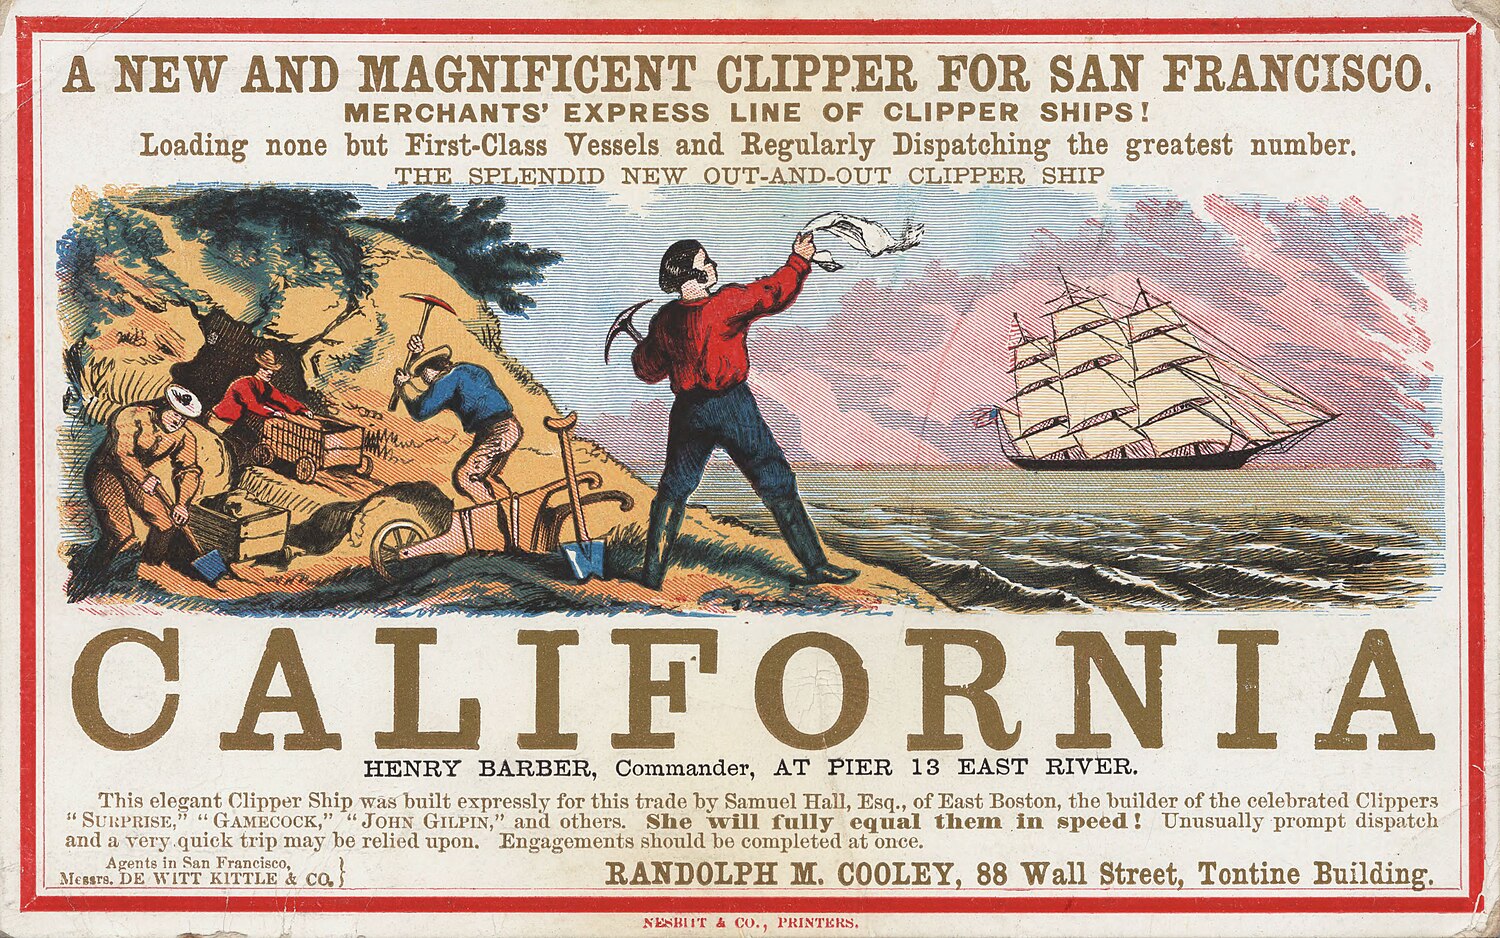 https://upload.wikimedia.org/wikipedia/commons/thumb/0/0d/California_Clipper_500.jpg/1500px-California_Clipper_500.jpg